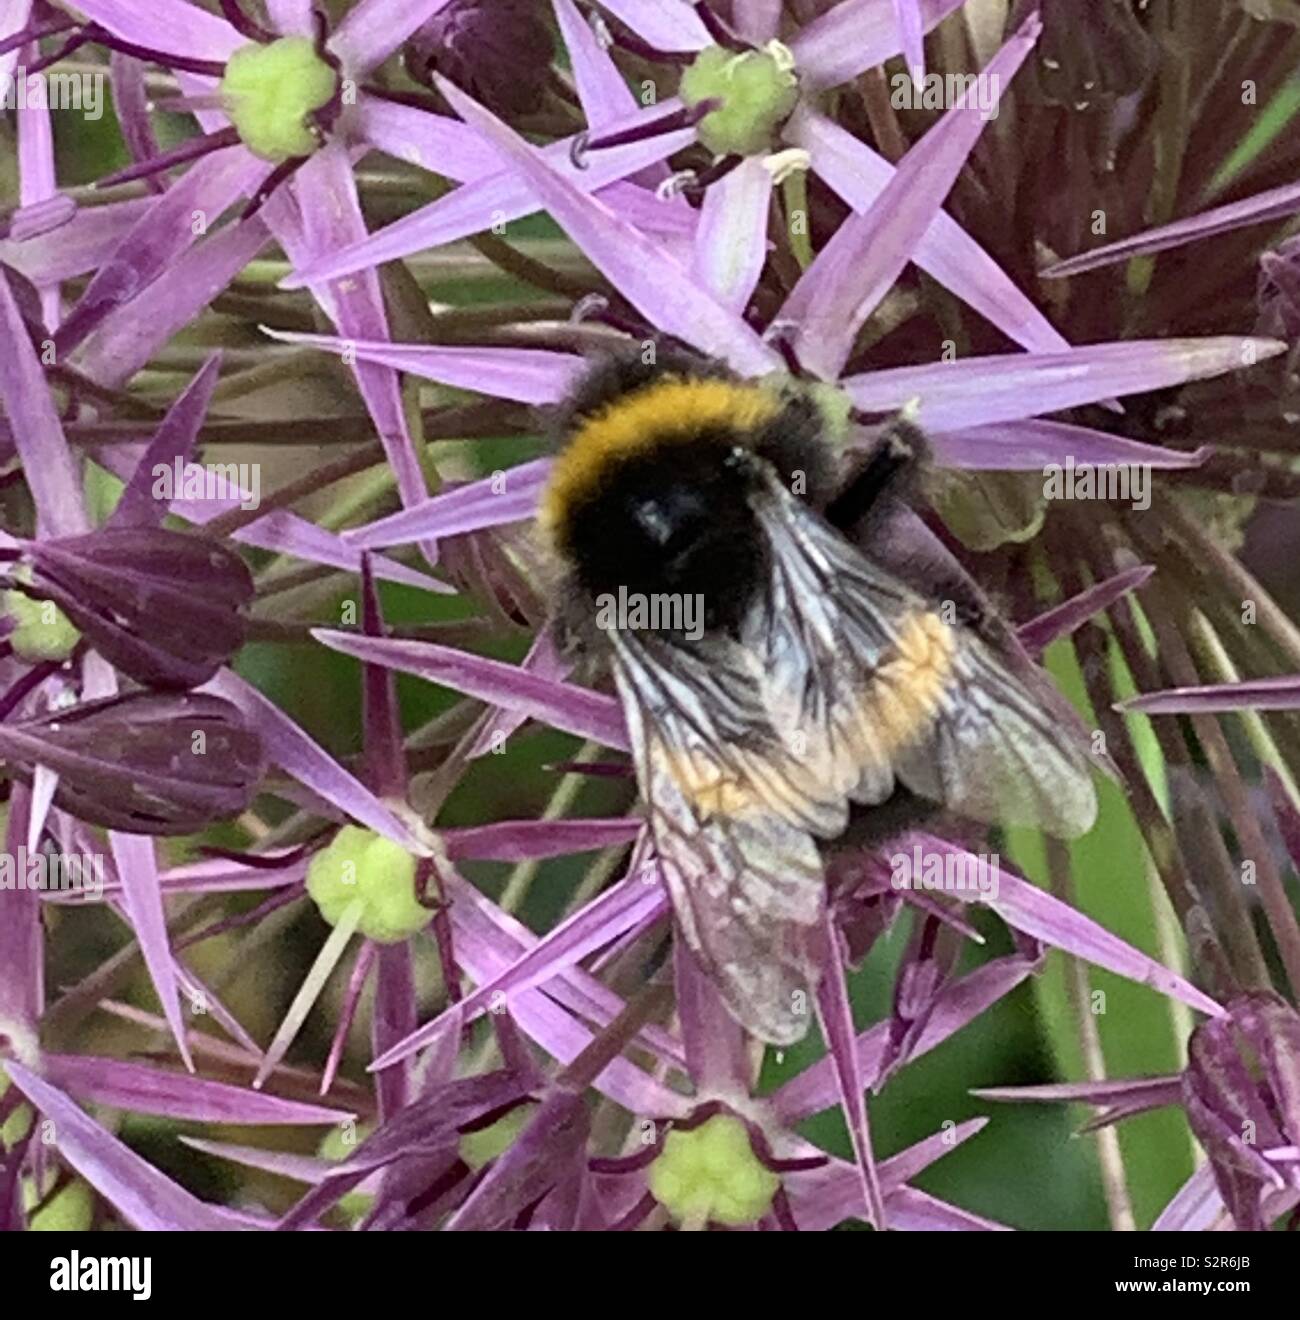 Bee on alium flower Stock Photo